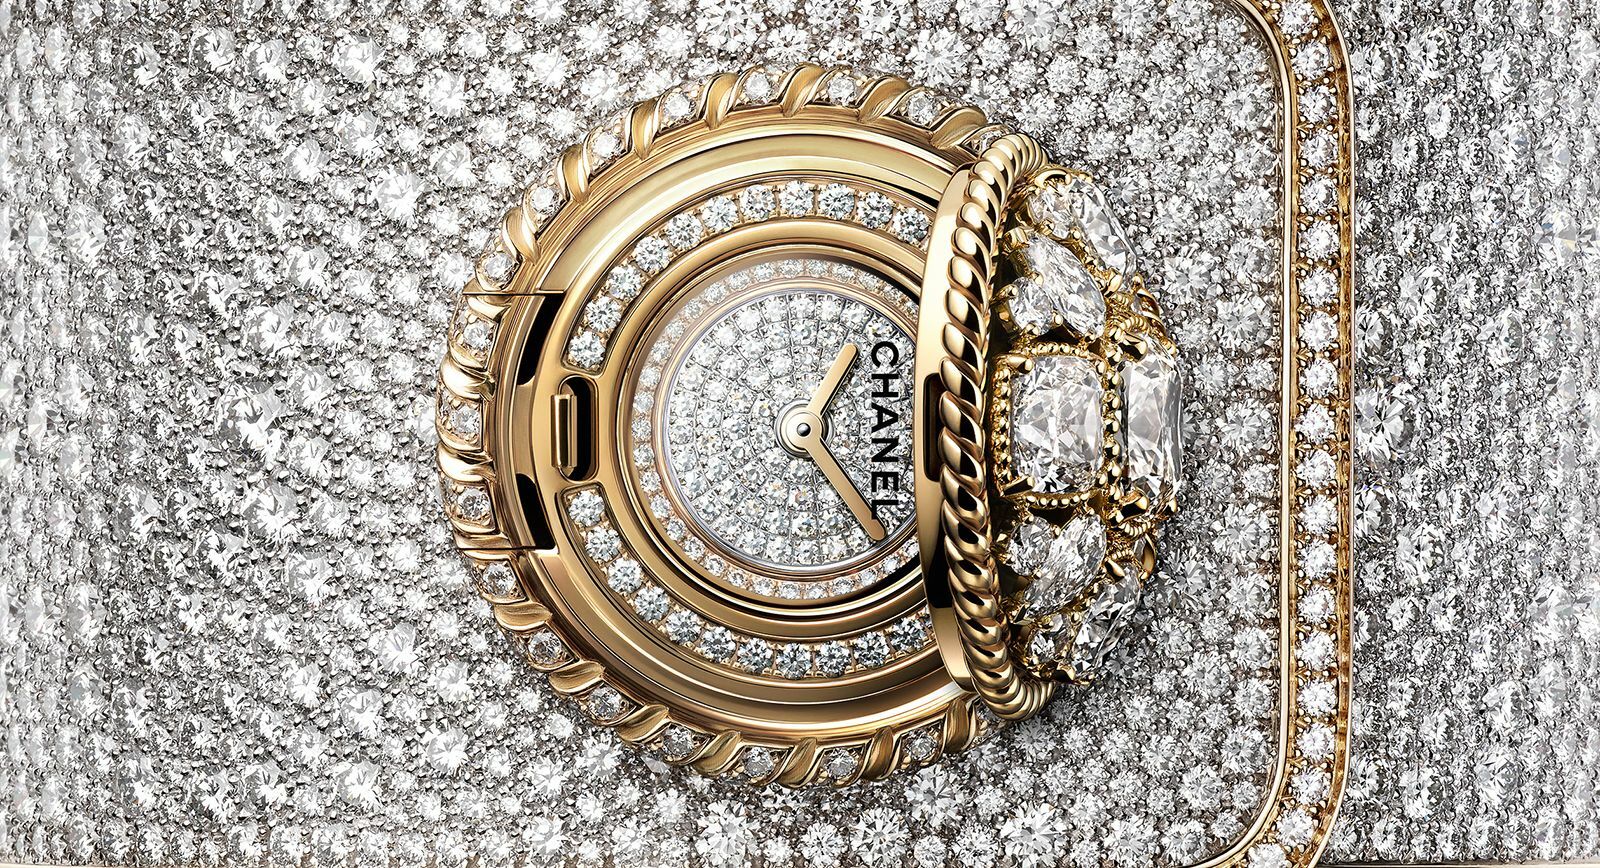 Chanel Mademoiselle Privé Bouton high jewellery secret watch